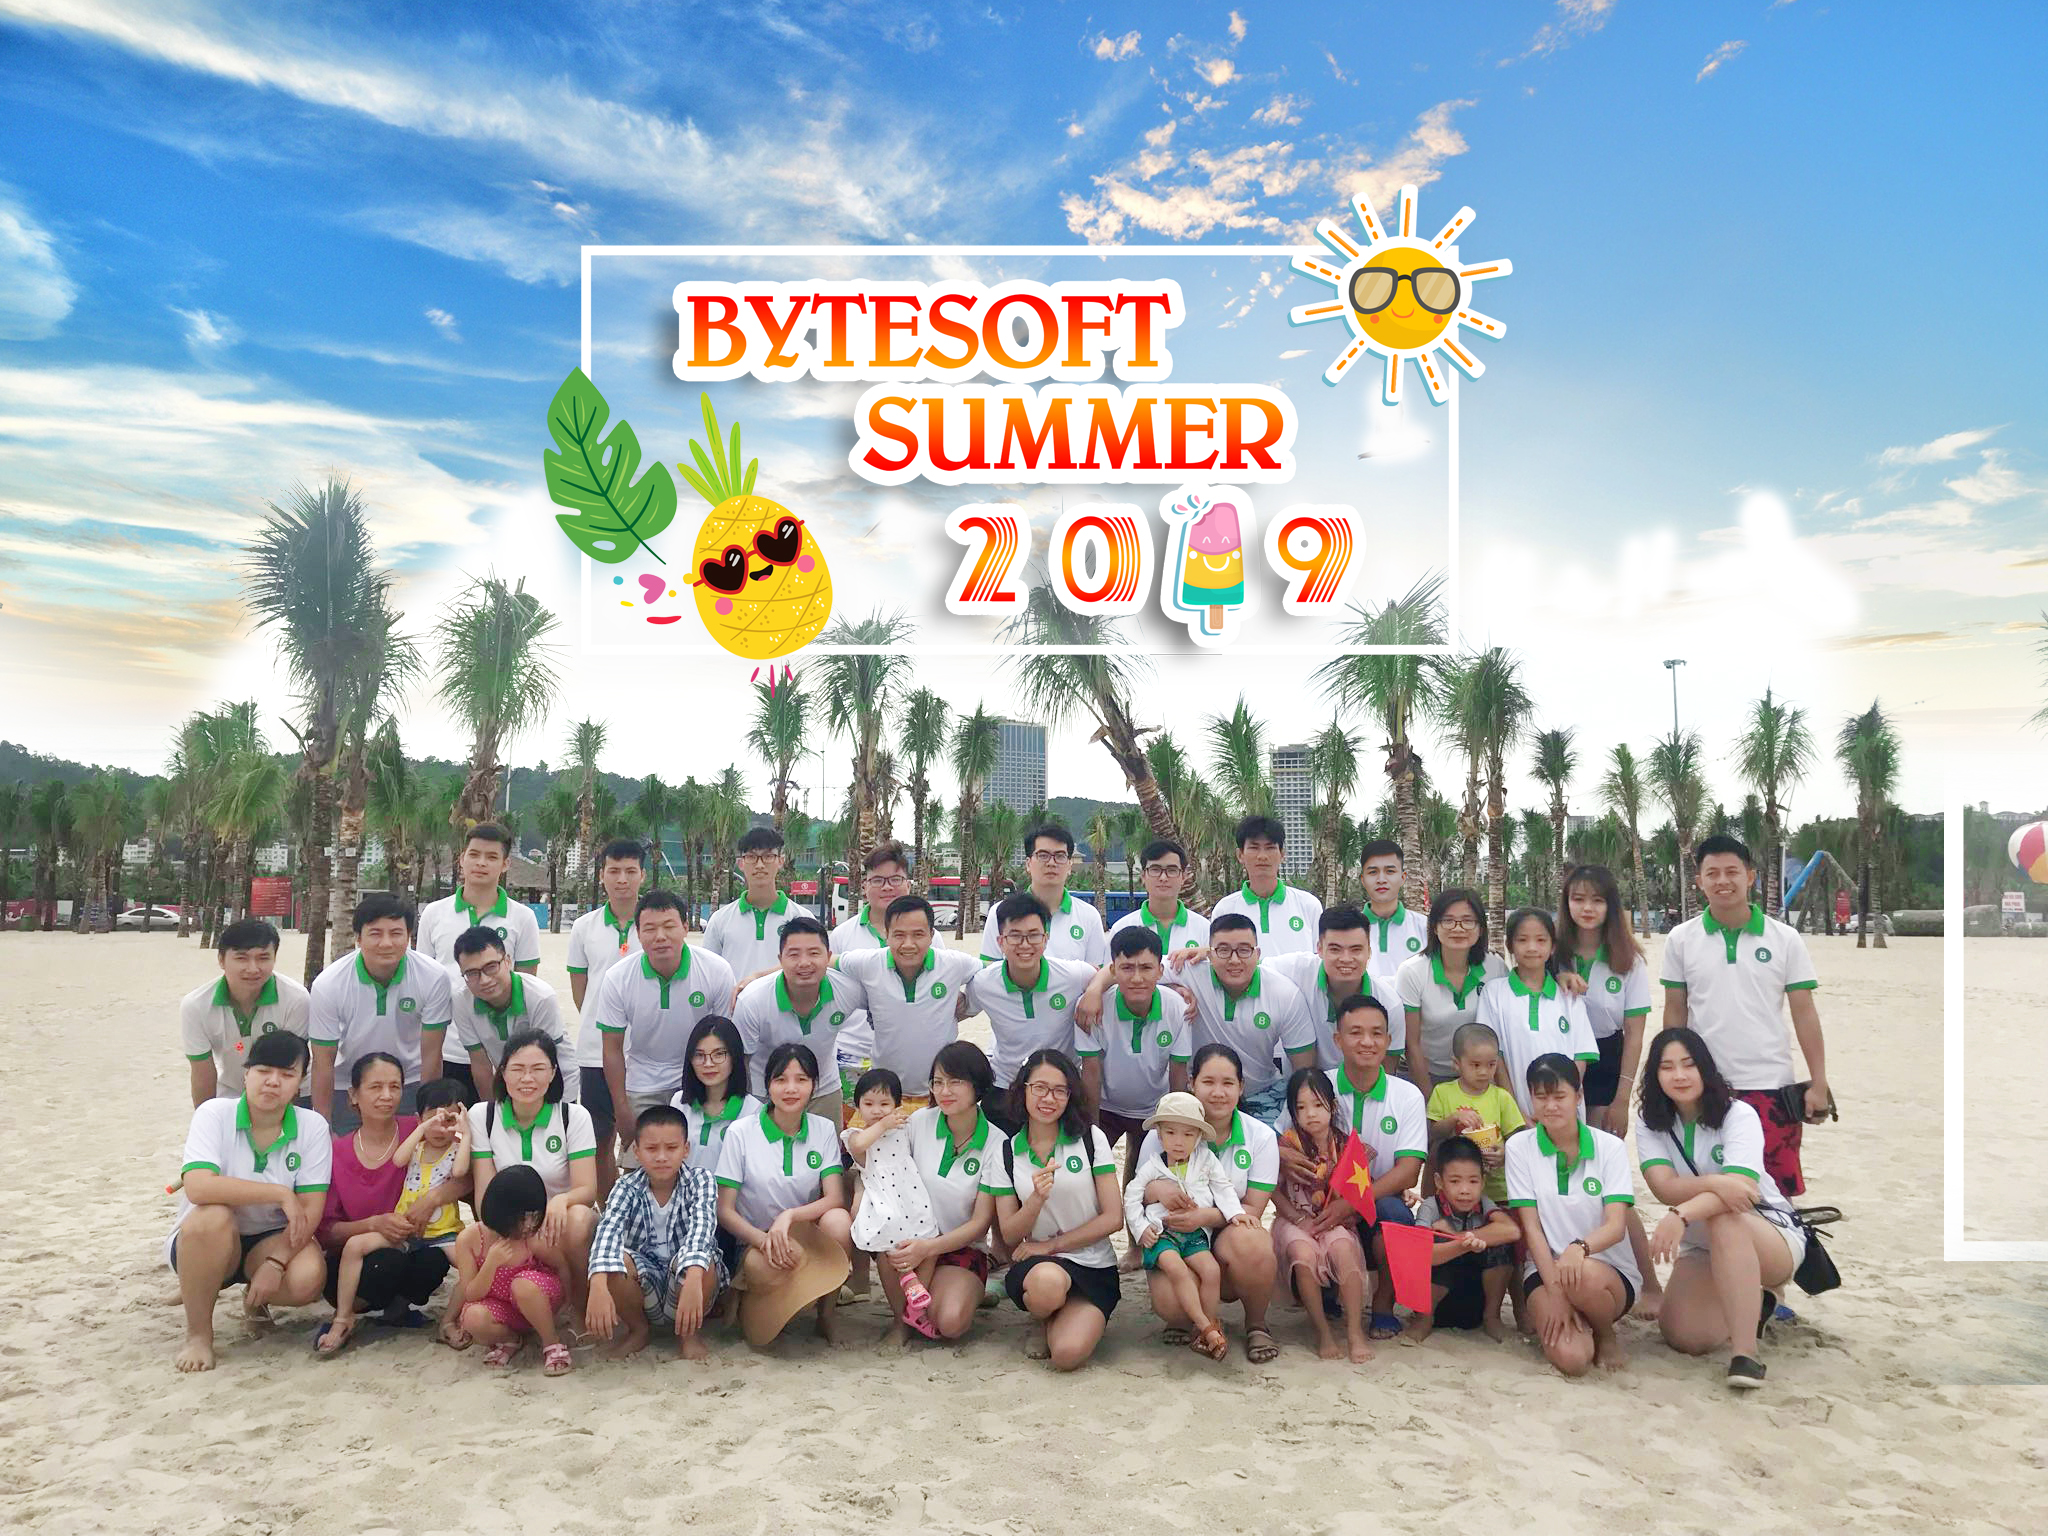 Having fun in Halong Bay with Bytesofter